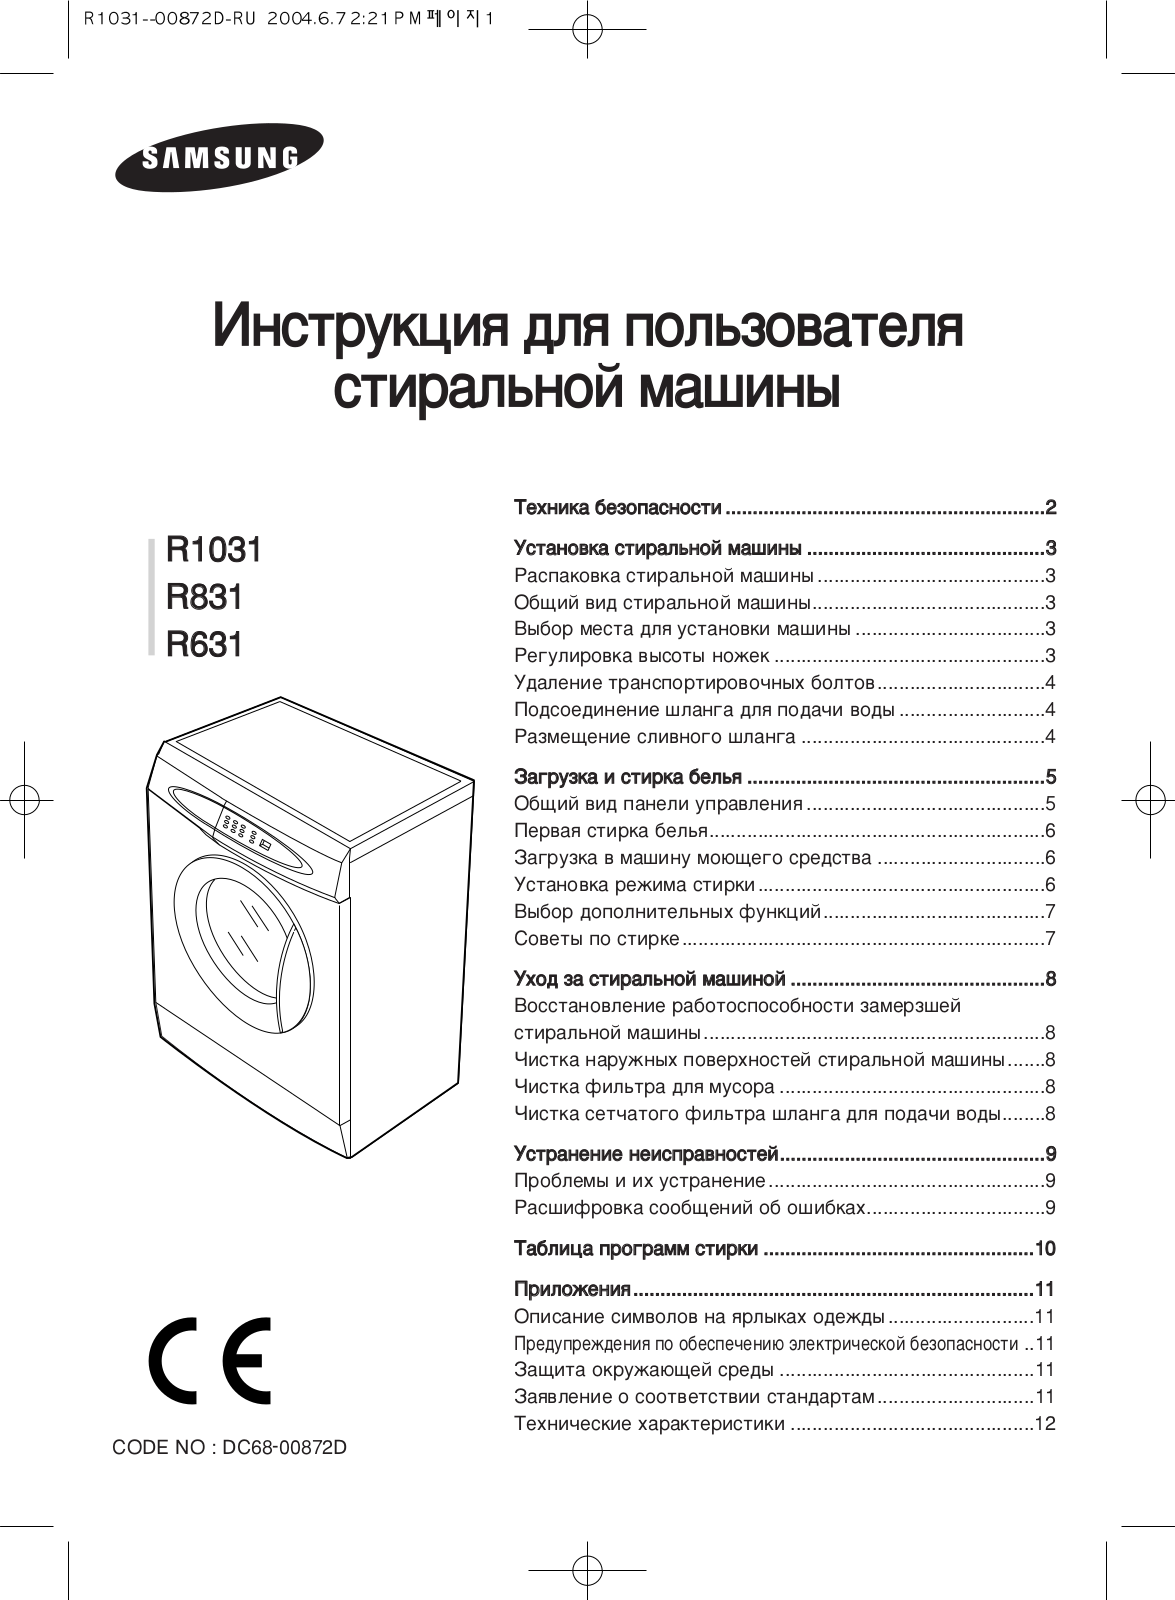 Samsung R831, R631, R1031 User Manual